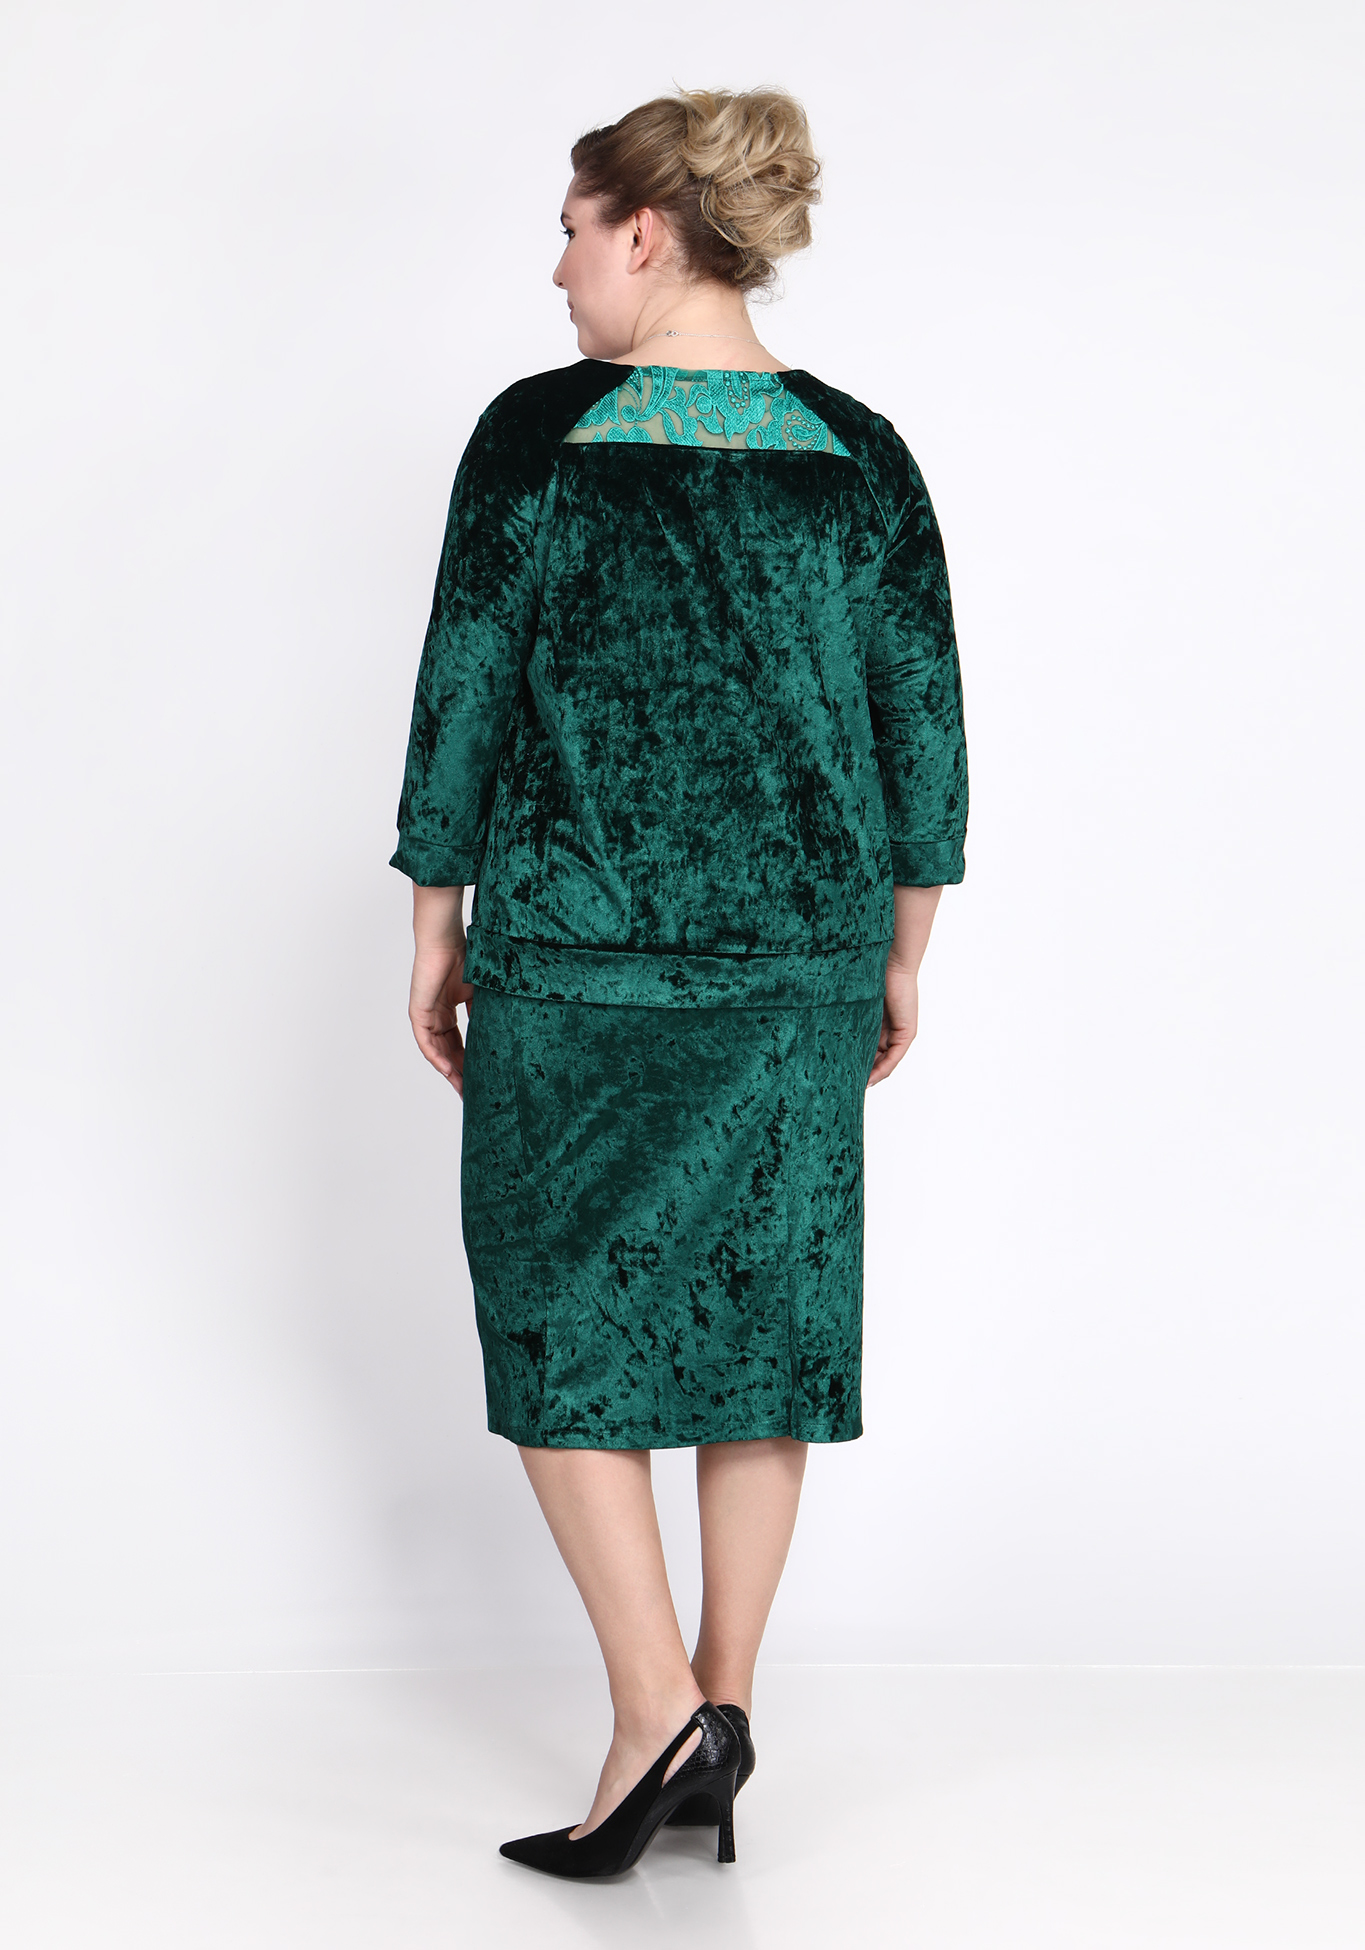 Костюм с юбкой из велюра Bianka Modeno, размер 50, цвет зелёный фантазийная - фото 5